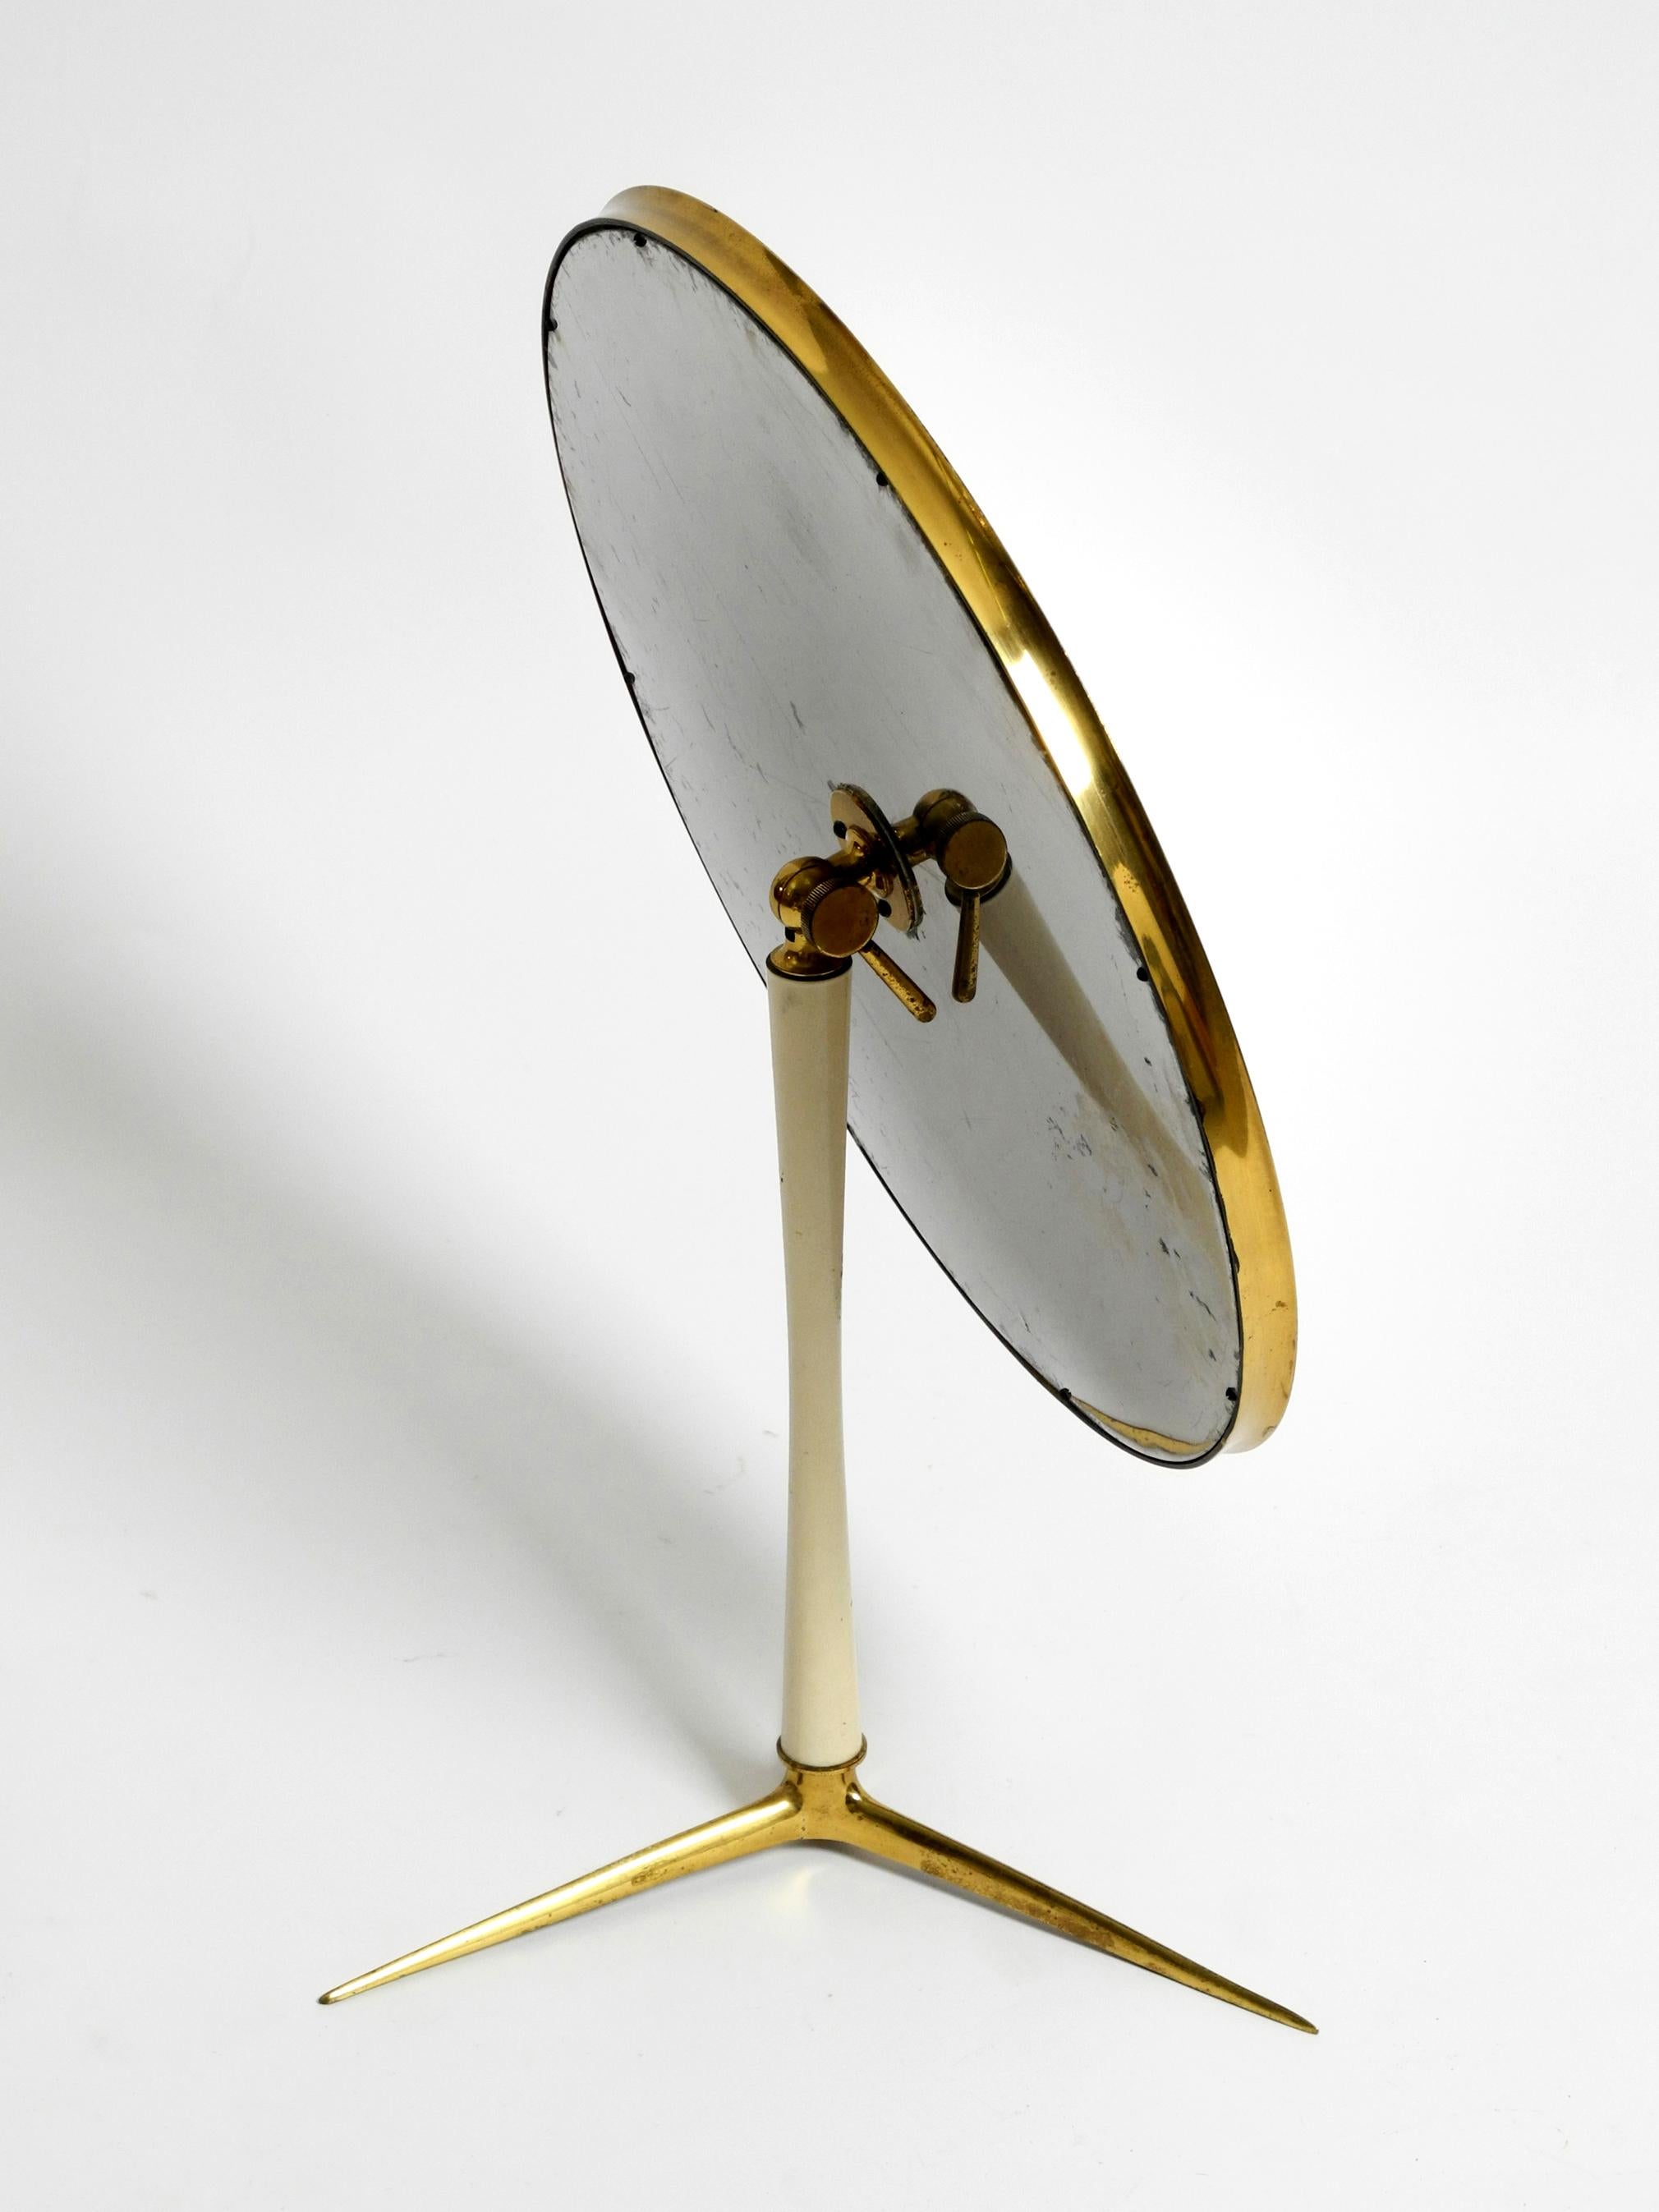 Moveable, Large, Midcentury Brass Table Mirror by Vereinigten Werkstätten In Good Condition For Sale In München, DE